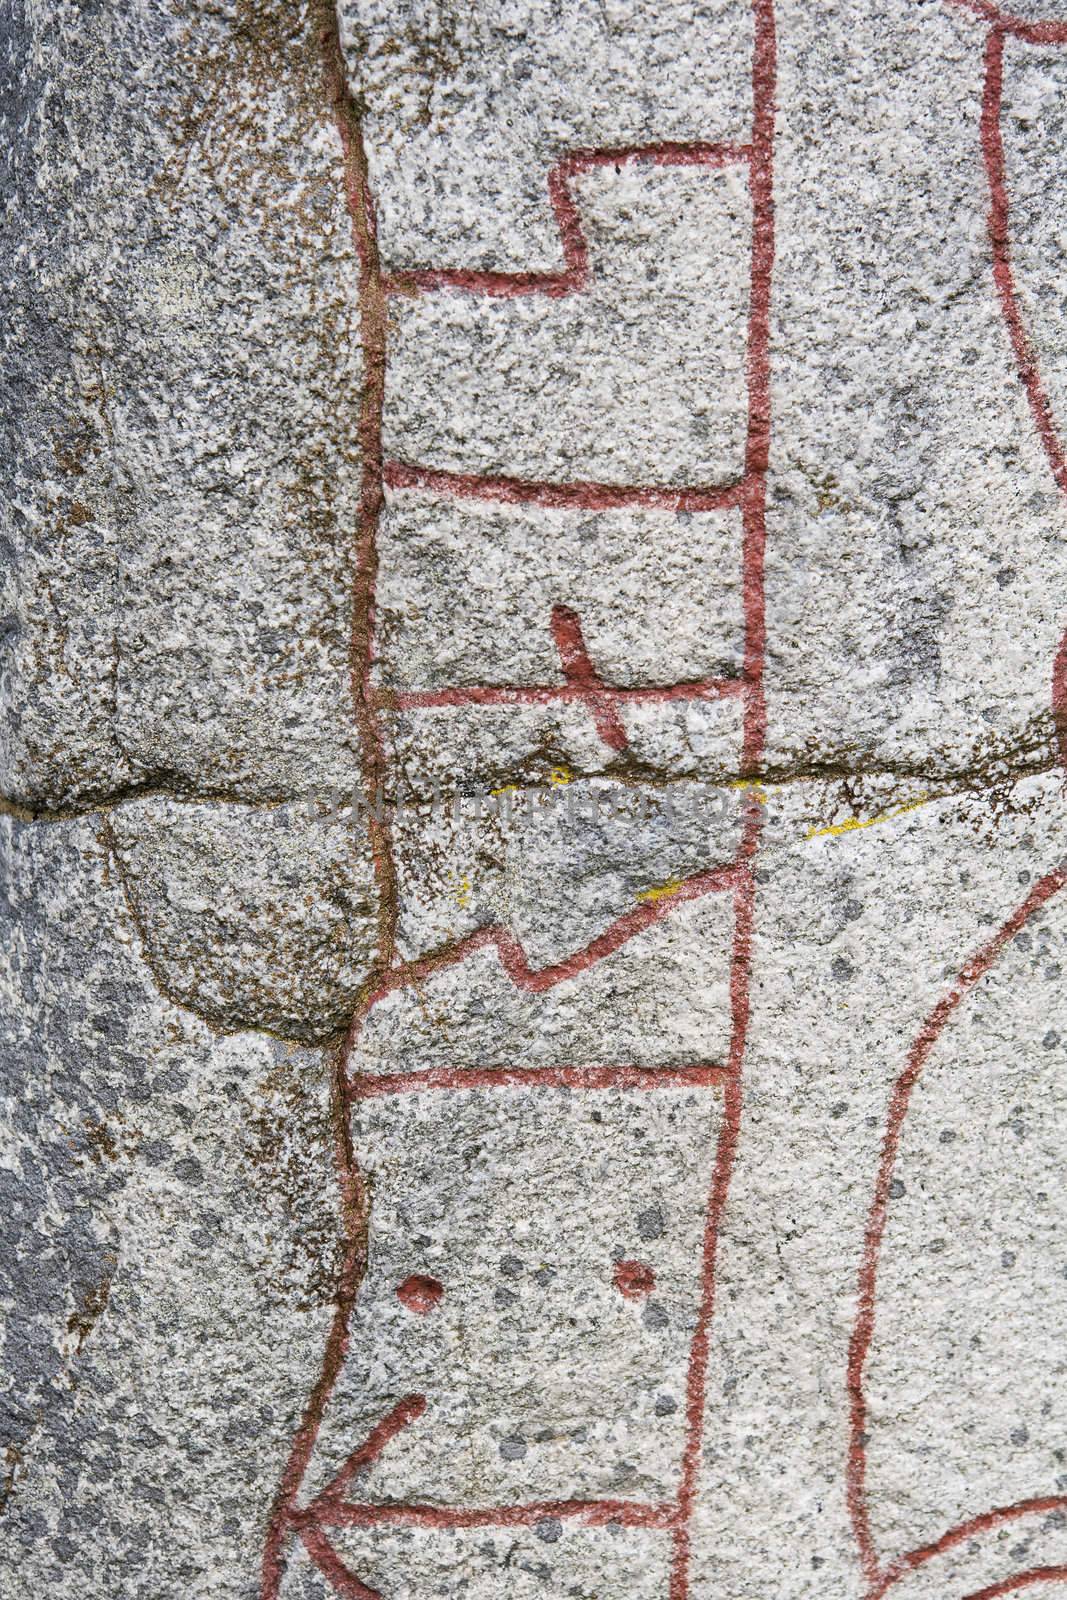 Antique Runes on a rock